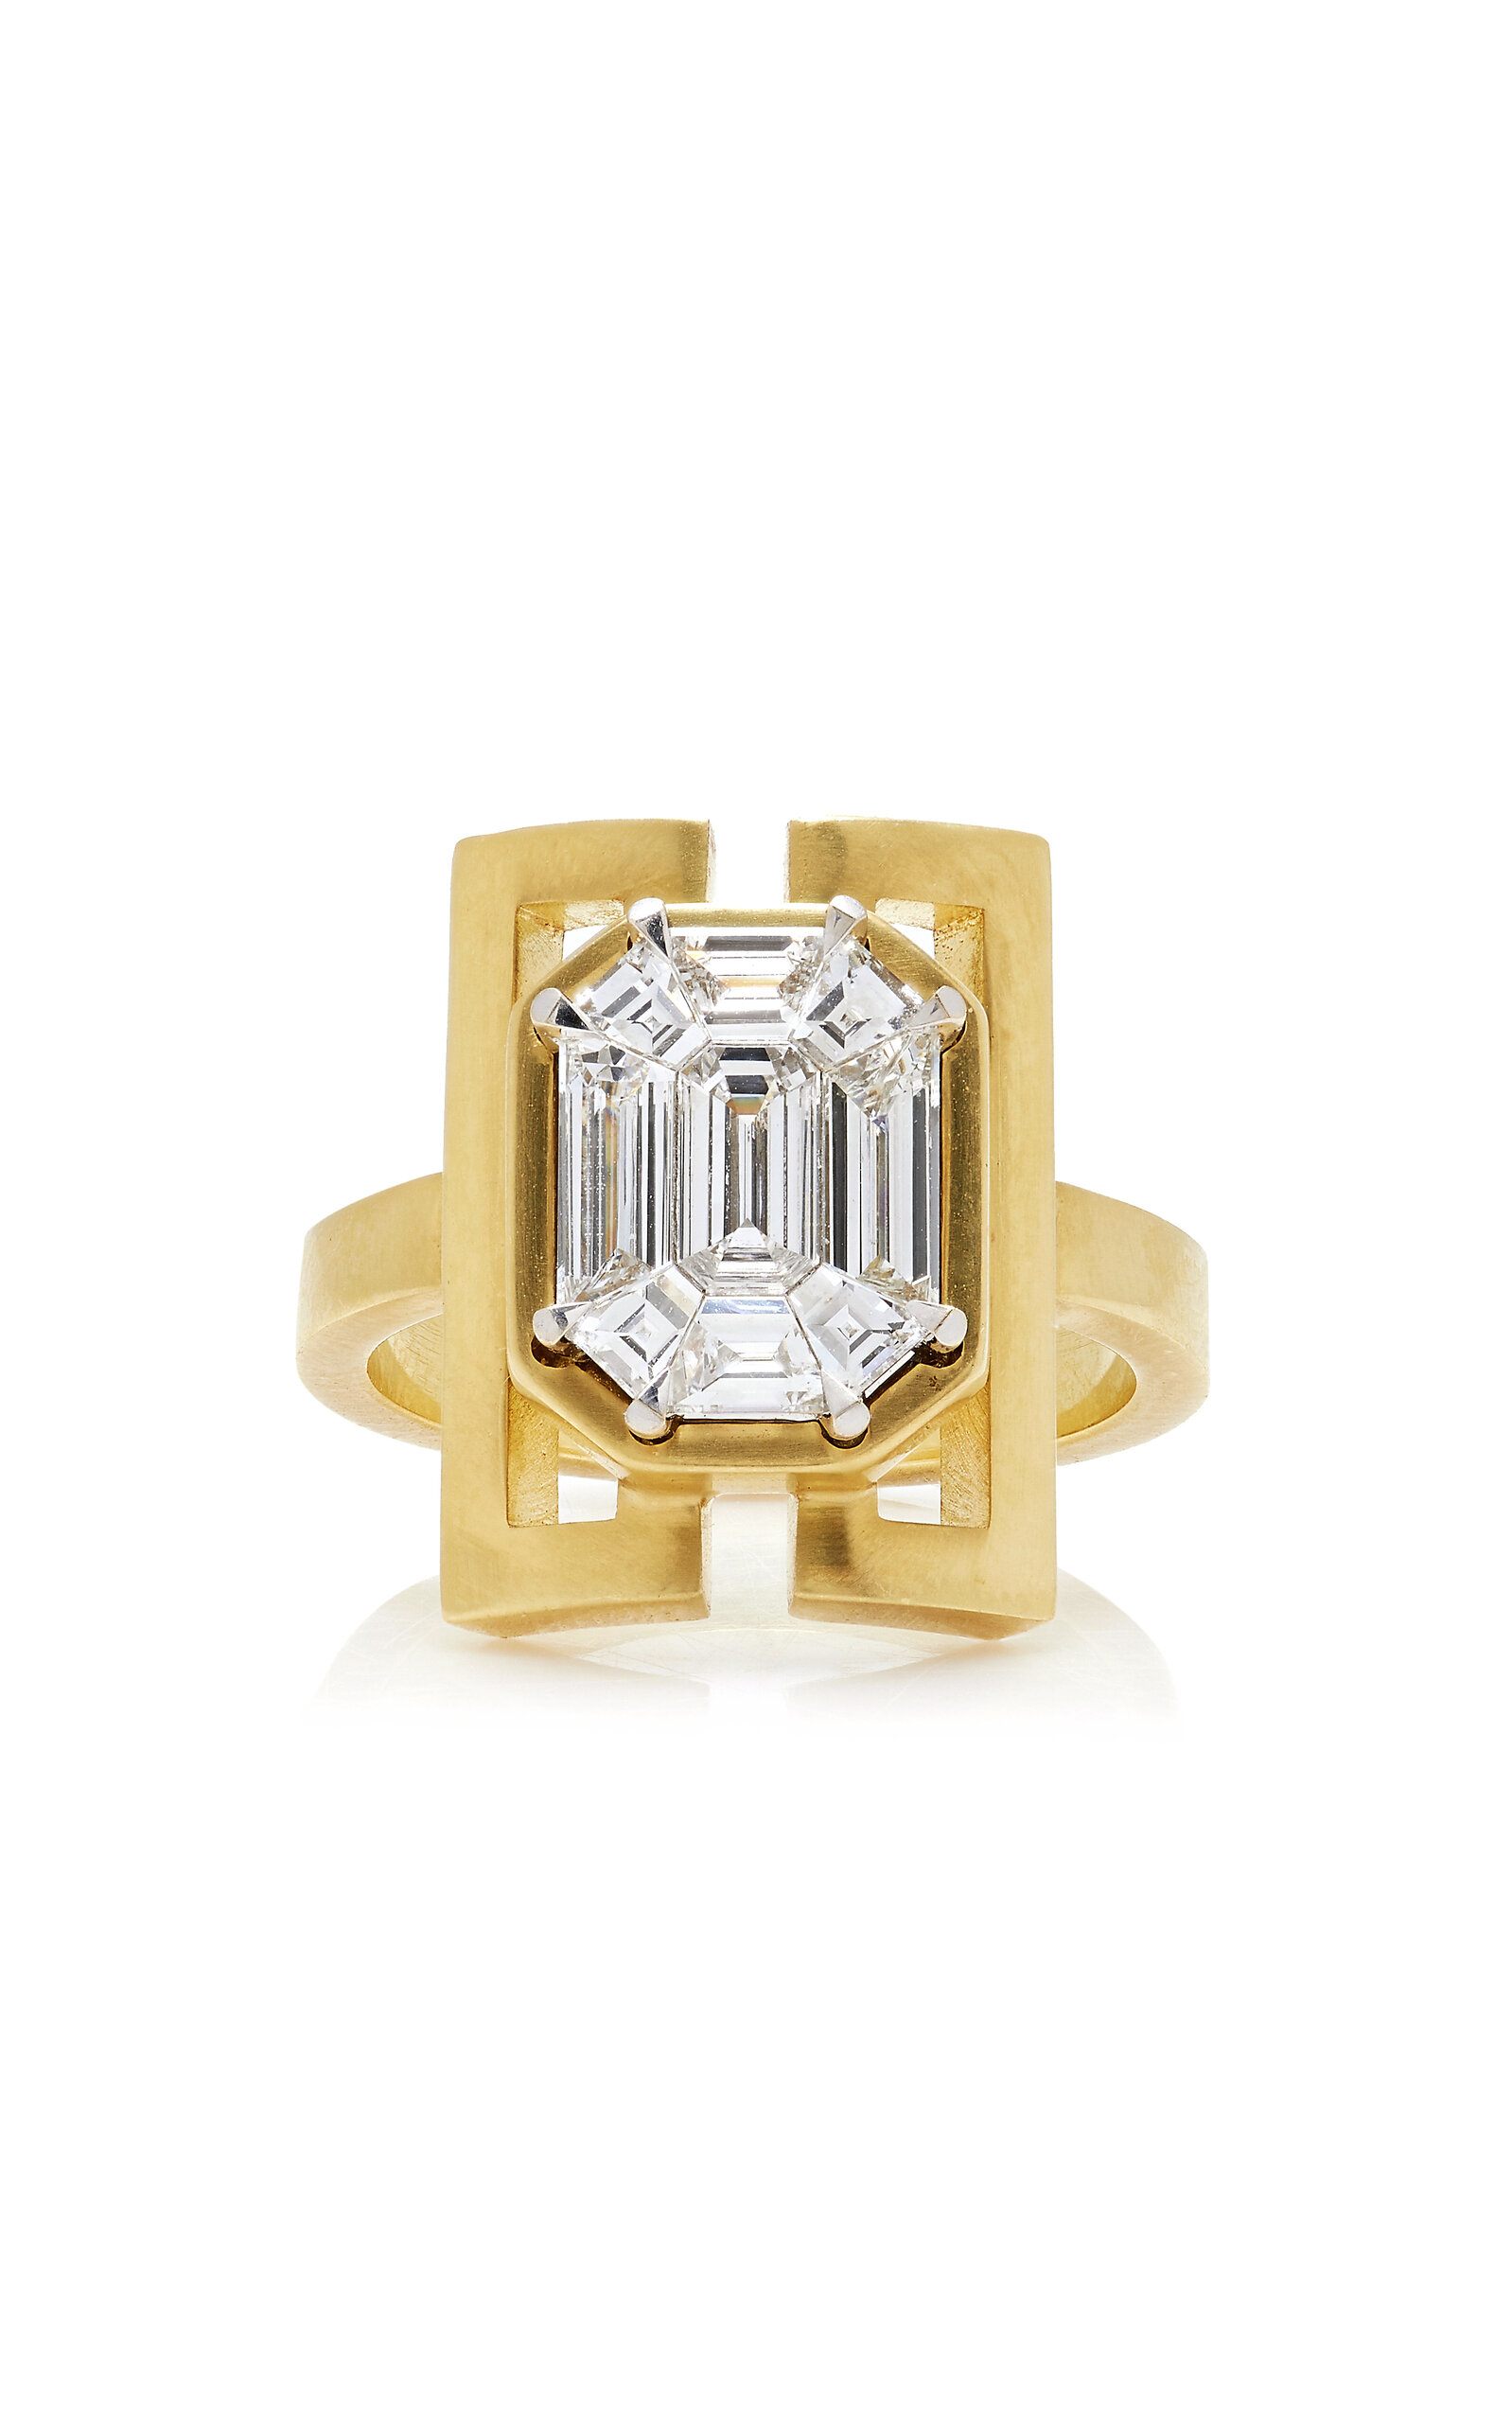 Kelly Mosaic 18K Yellow Gold Diamond Ring